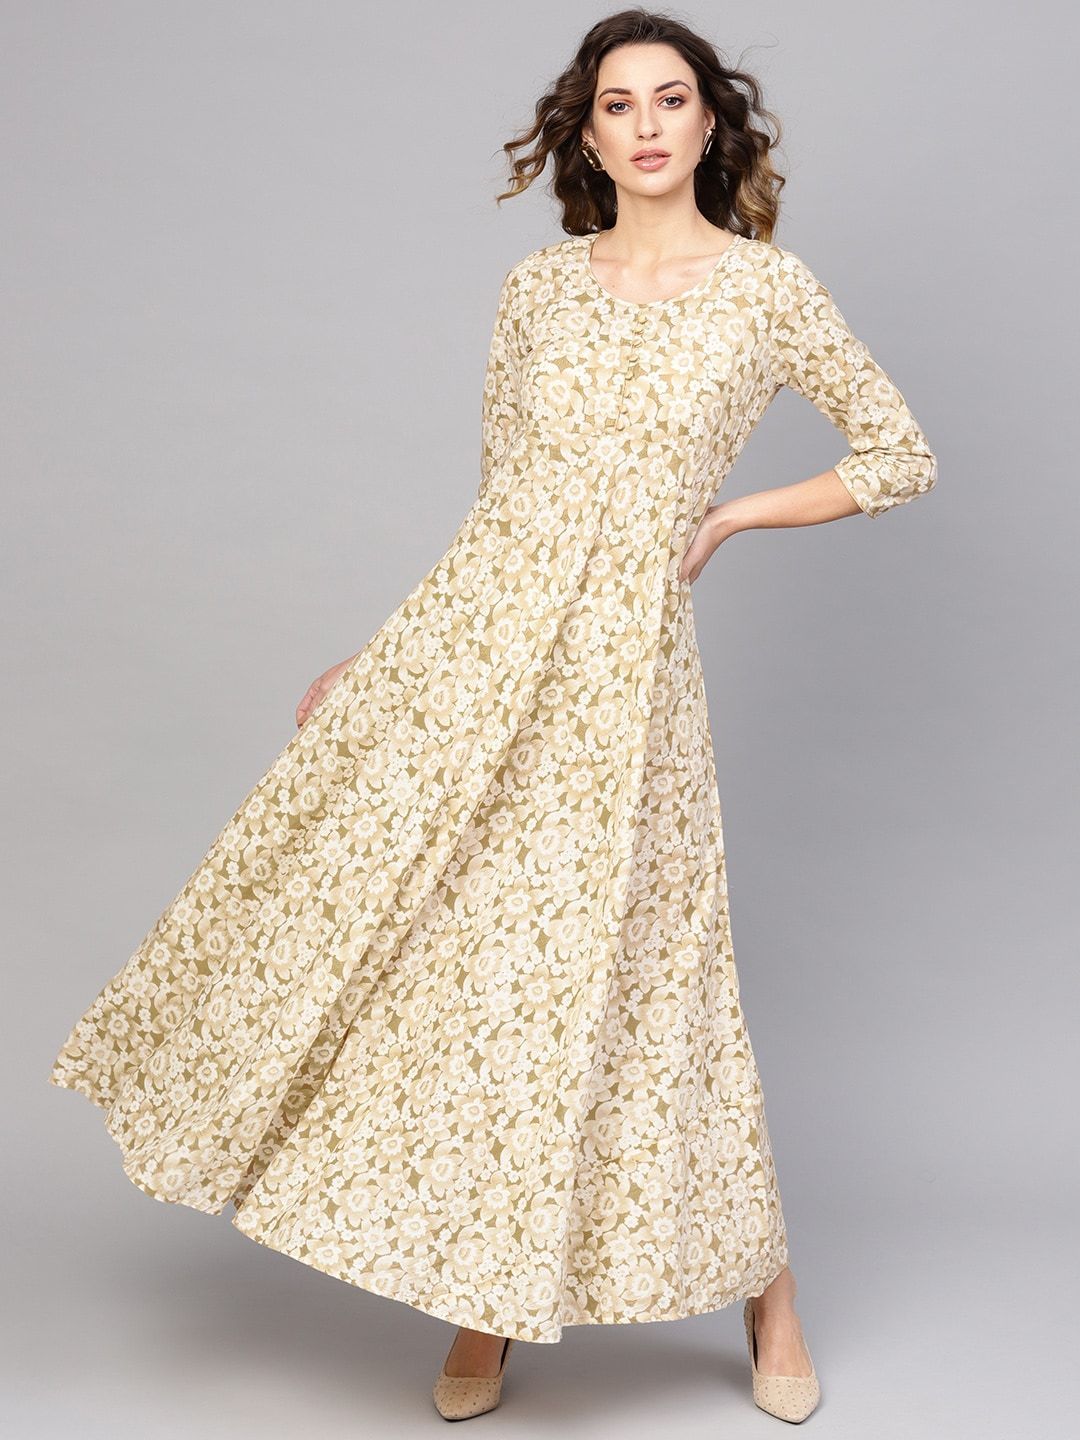 Women's  Off-White & Beige Floral Print Maxi Dress - AKS